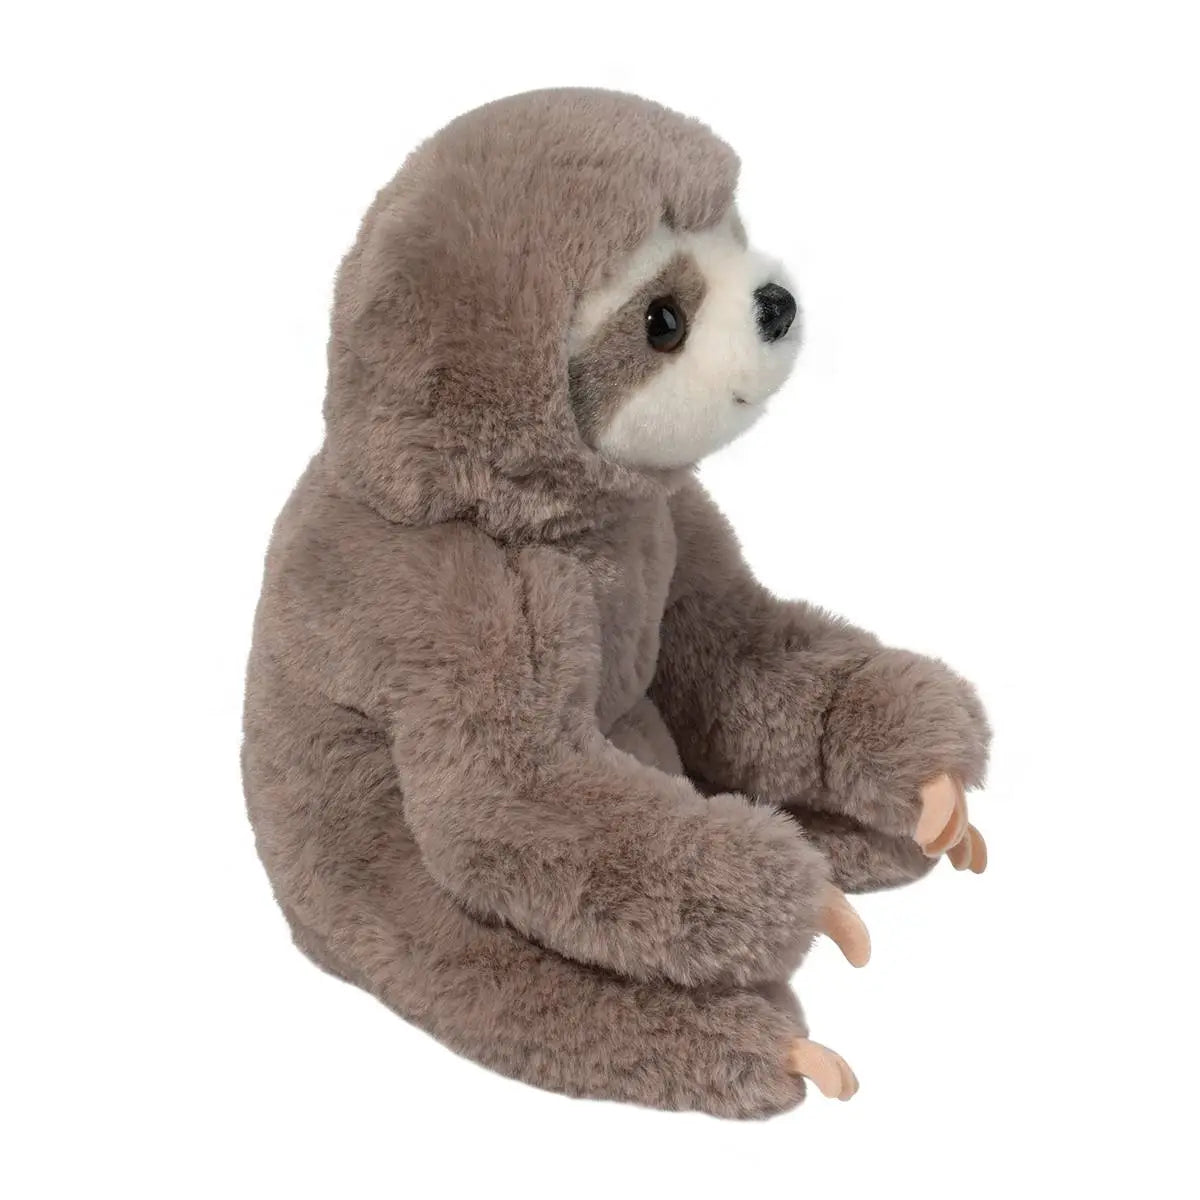 Stuffed Animal - Lizzie Sloth